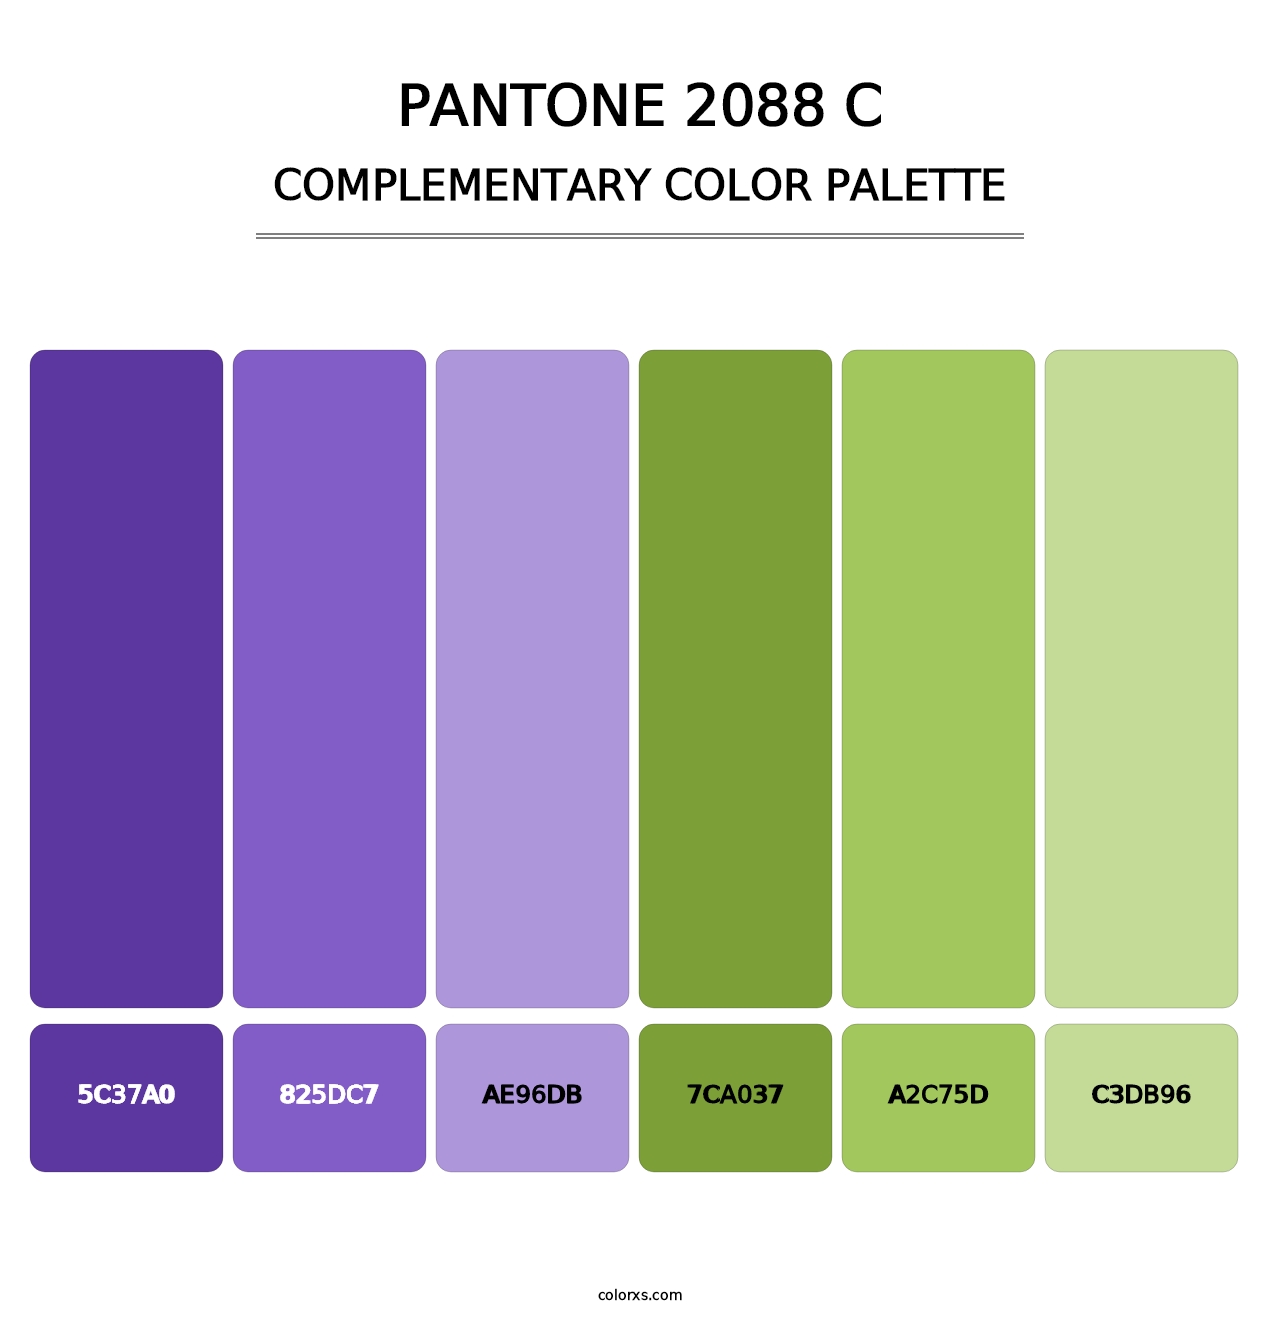 PANTONE 2088 C - Complementary Color Palette